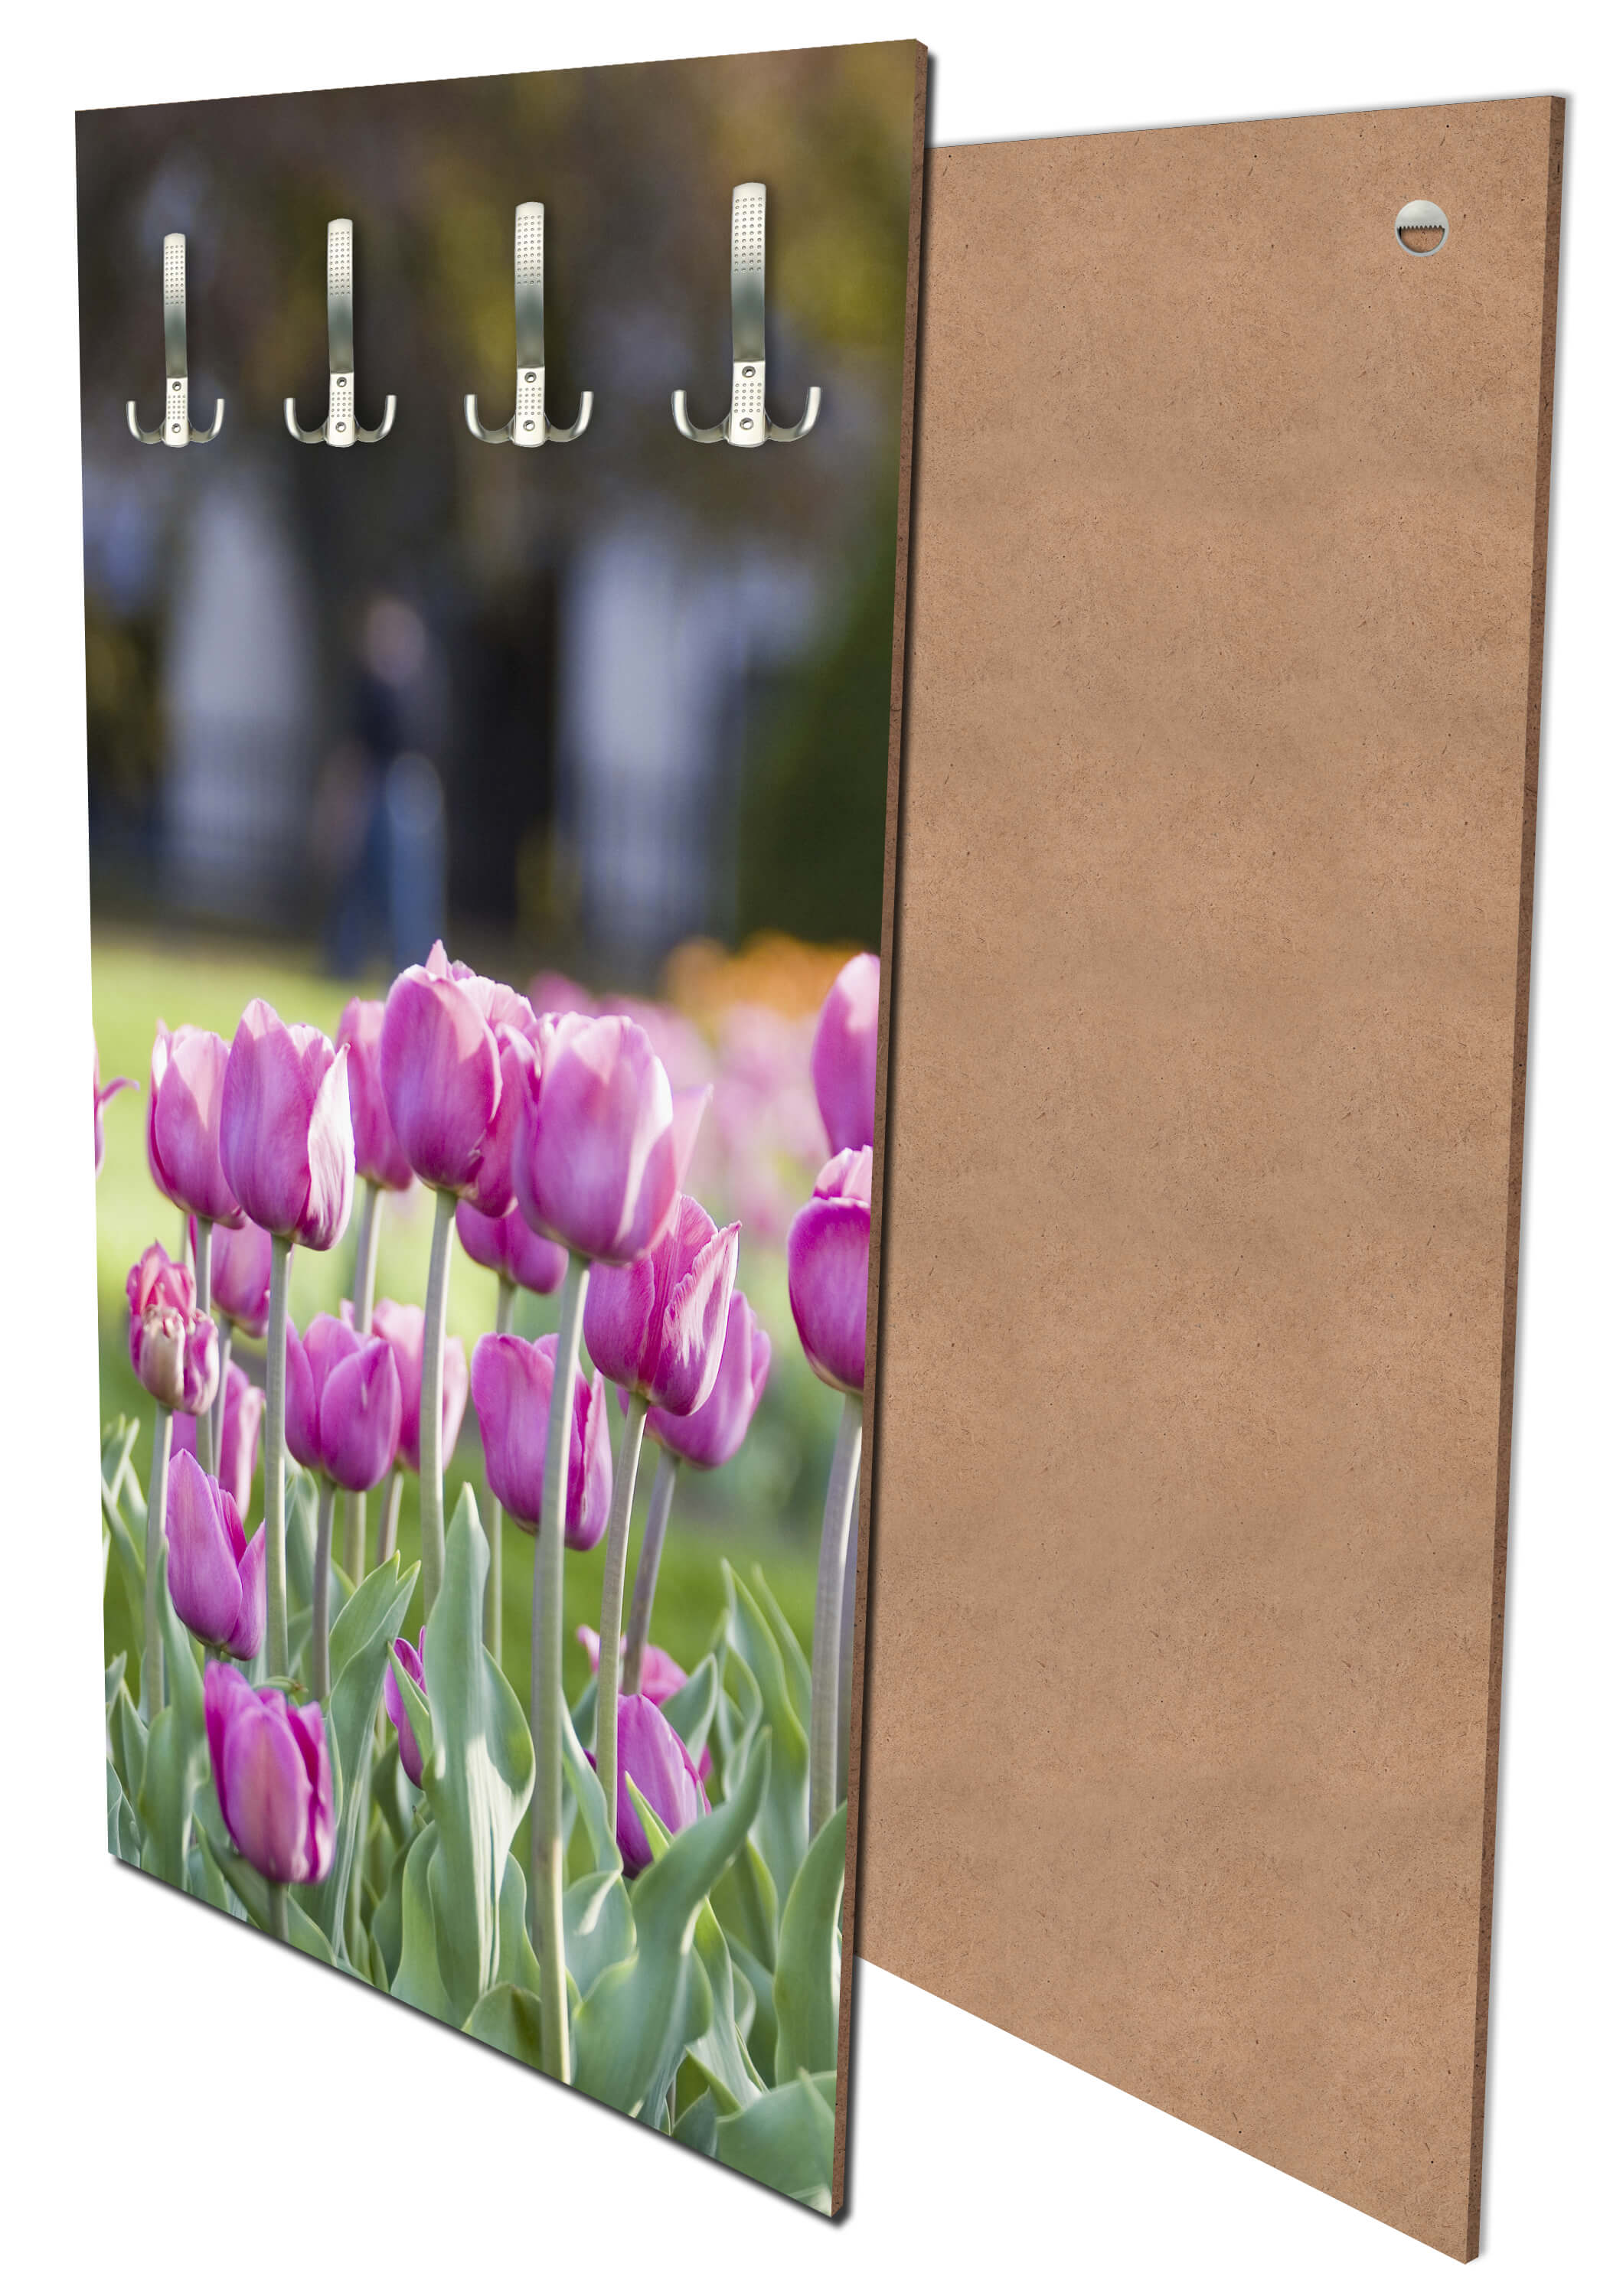 Garderobe Pinke Tulpen M0016 entdecken - Bild 1